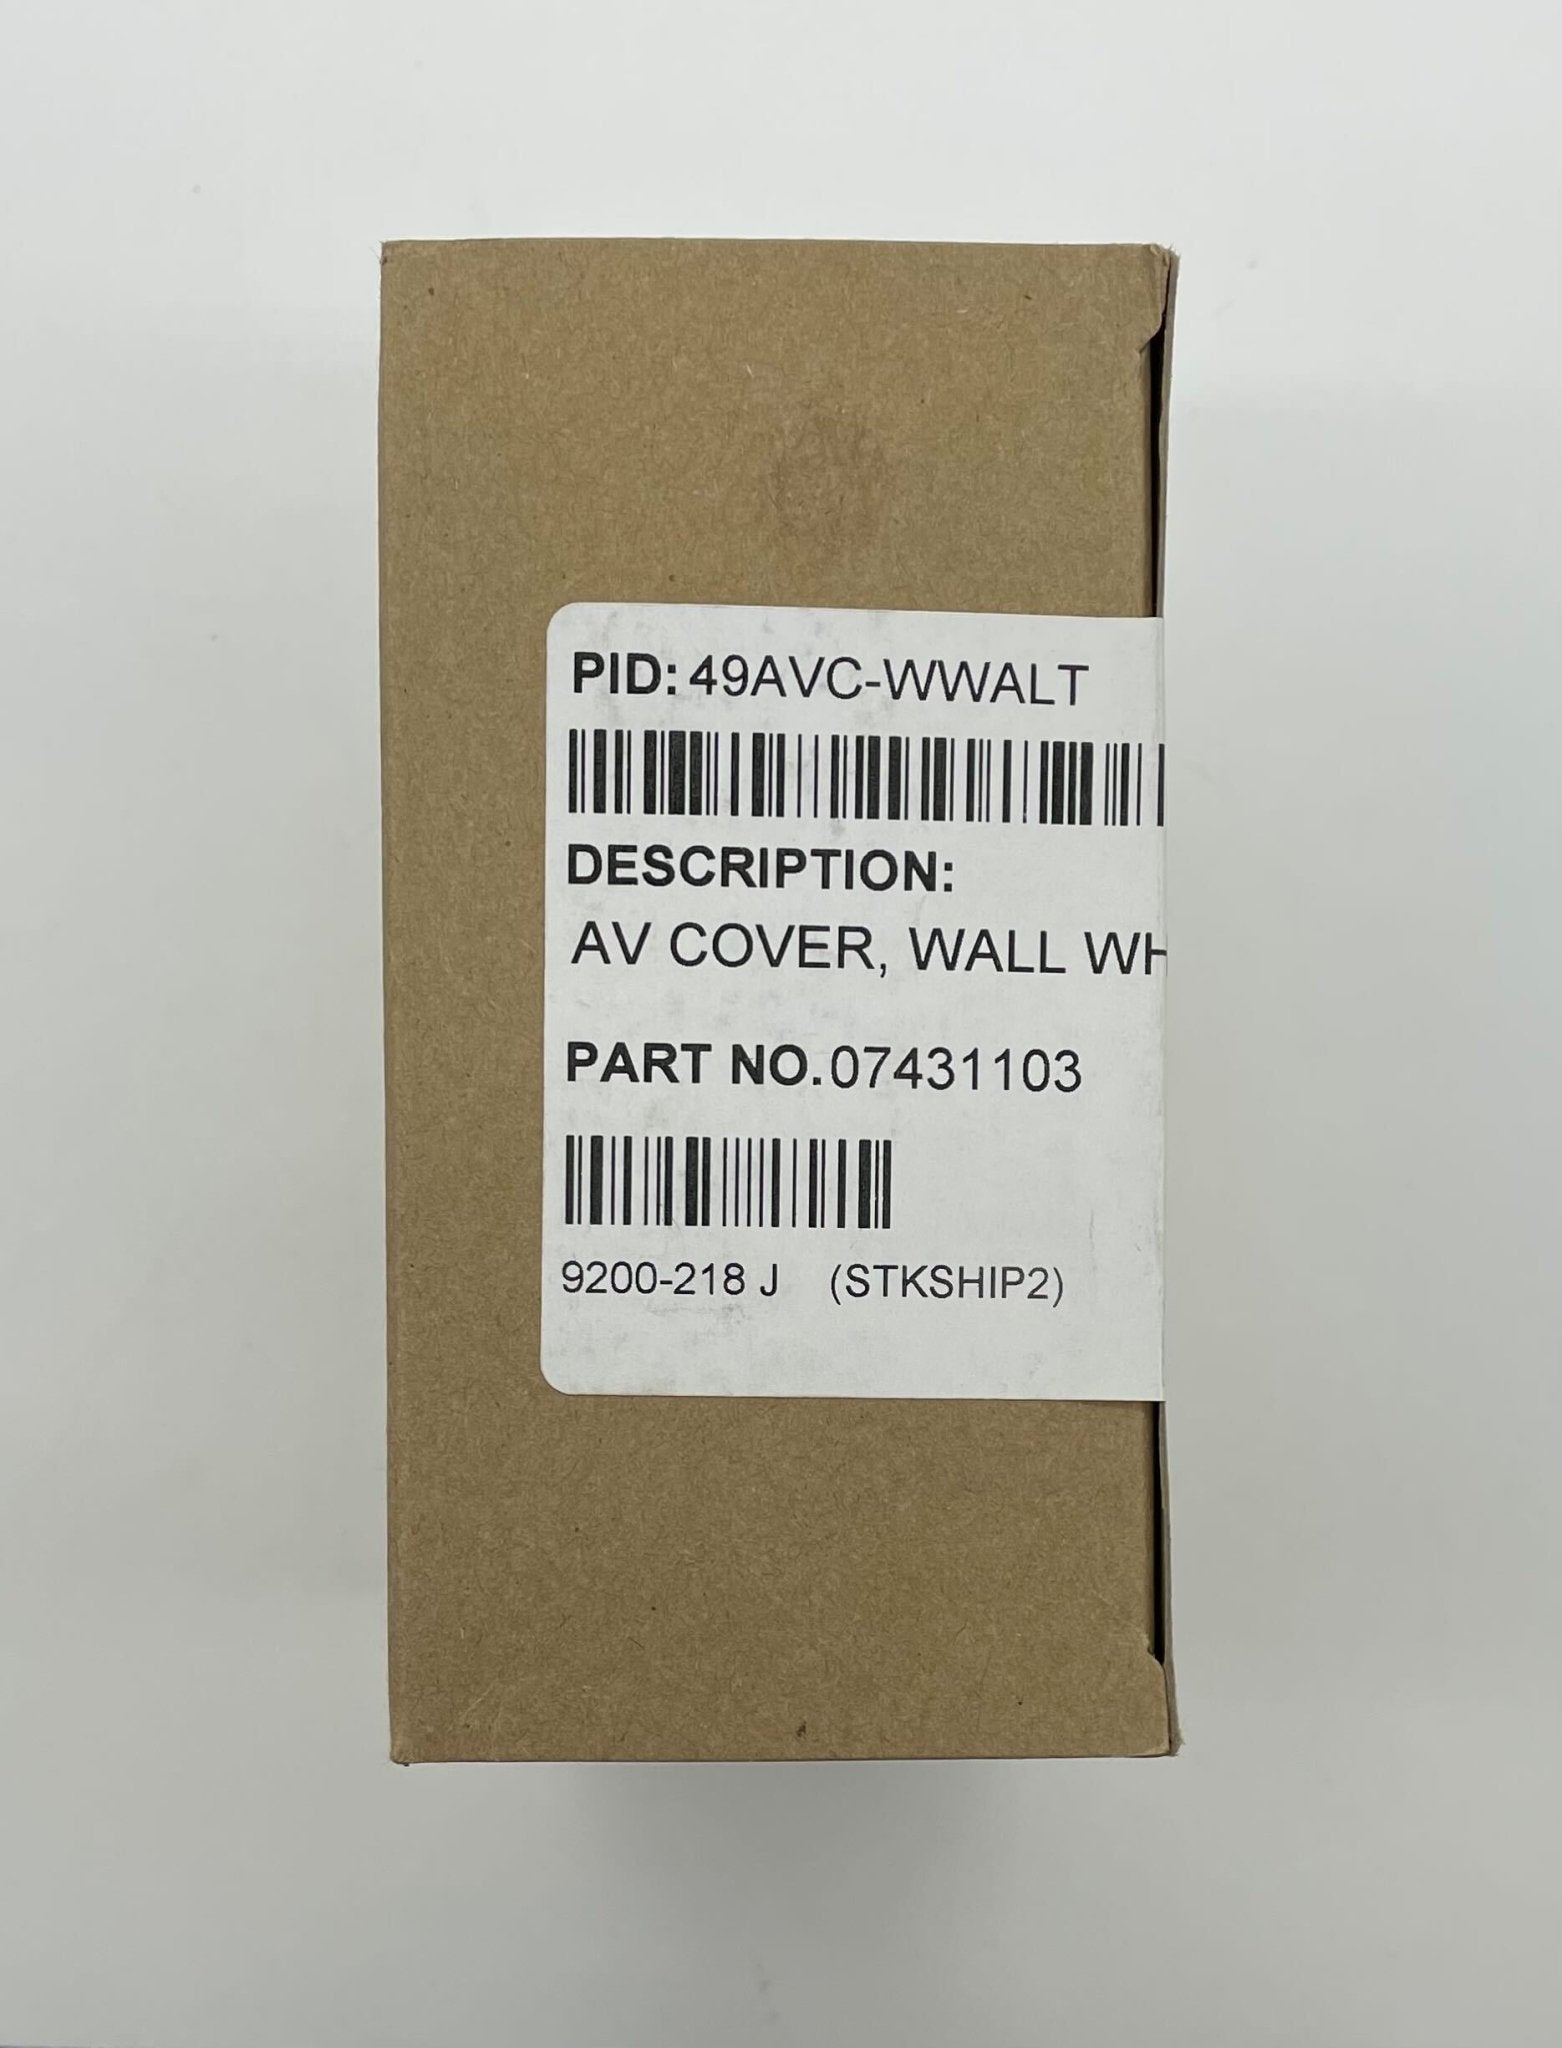 Simplex 49AVC-WWALT - The Fire Alarm Supplier